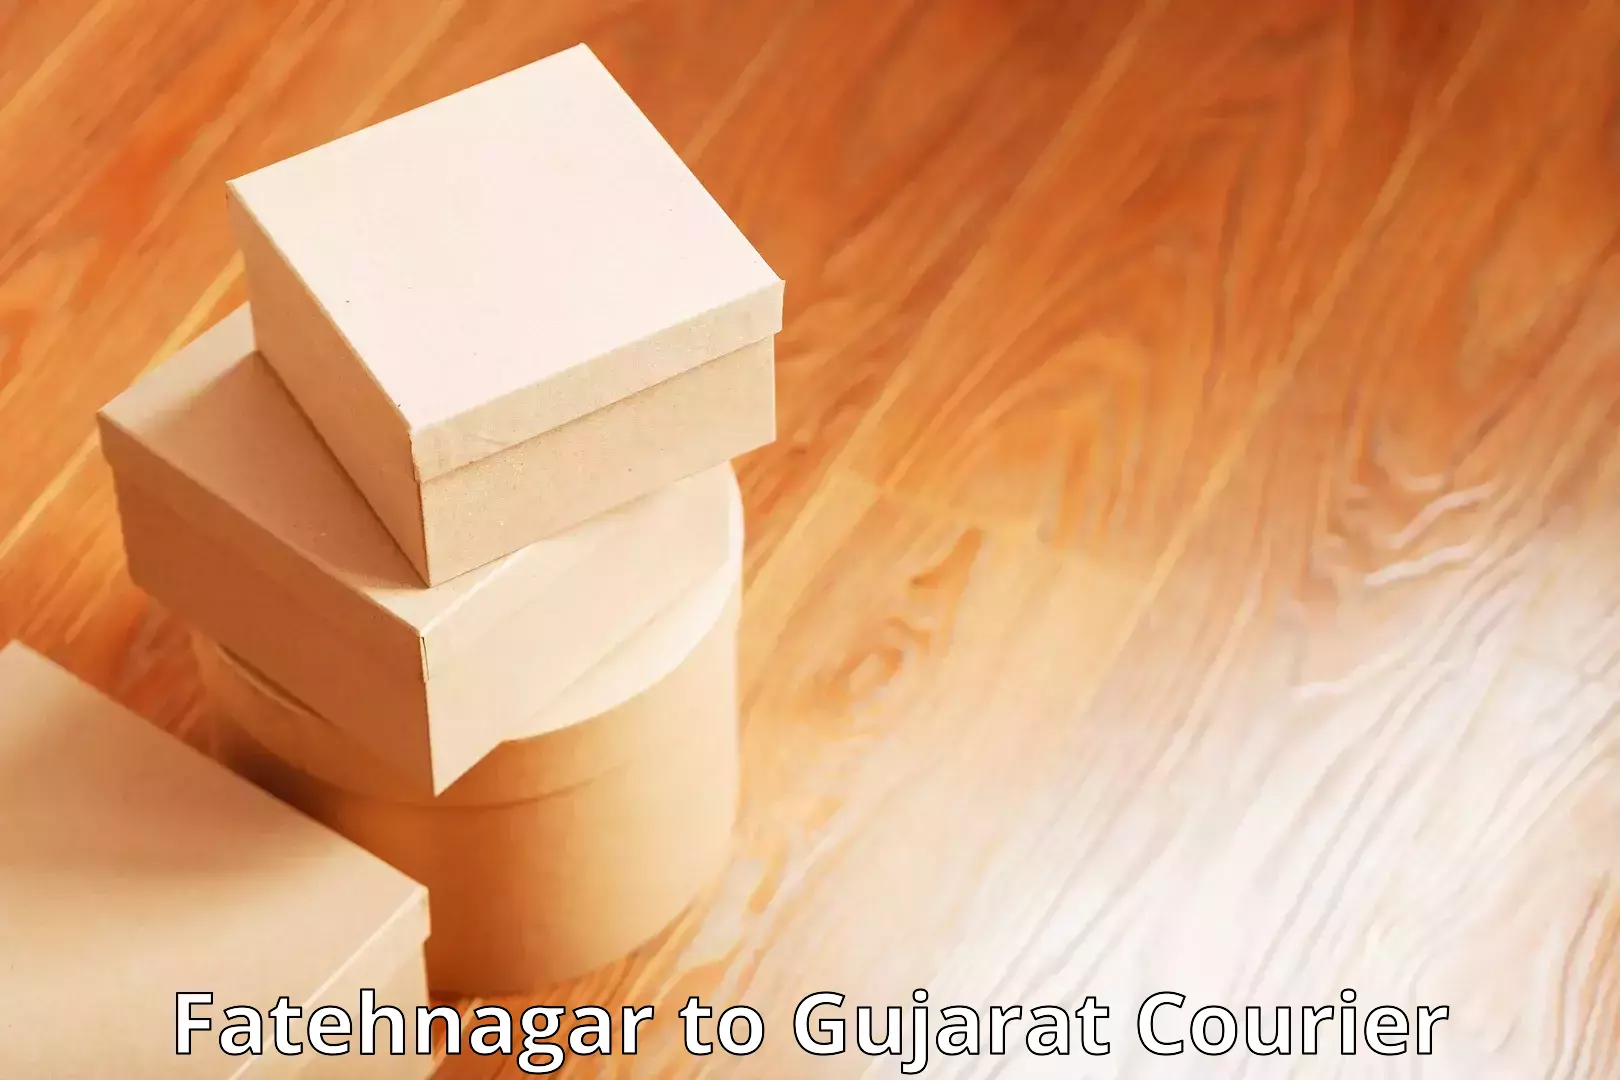 Express delivery network Fatehnagar to Patan Gujarat